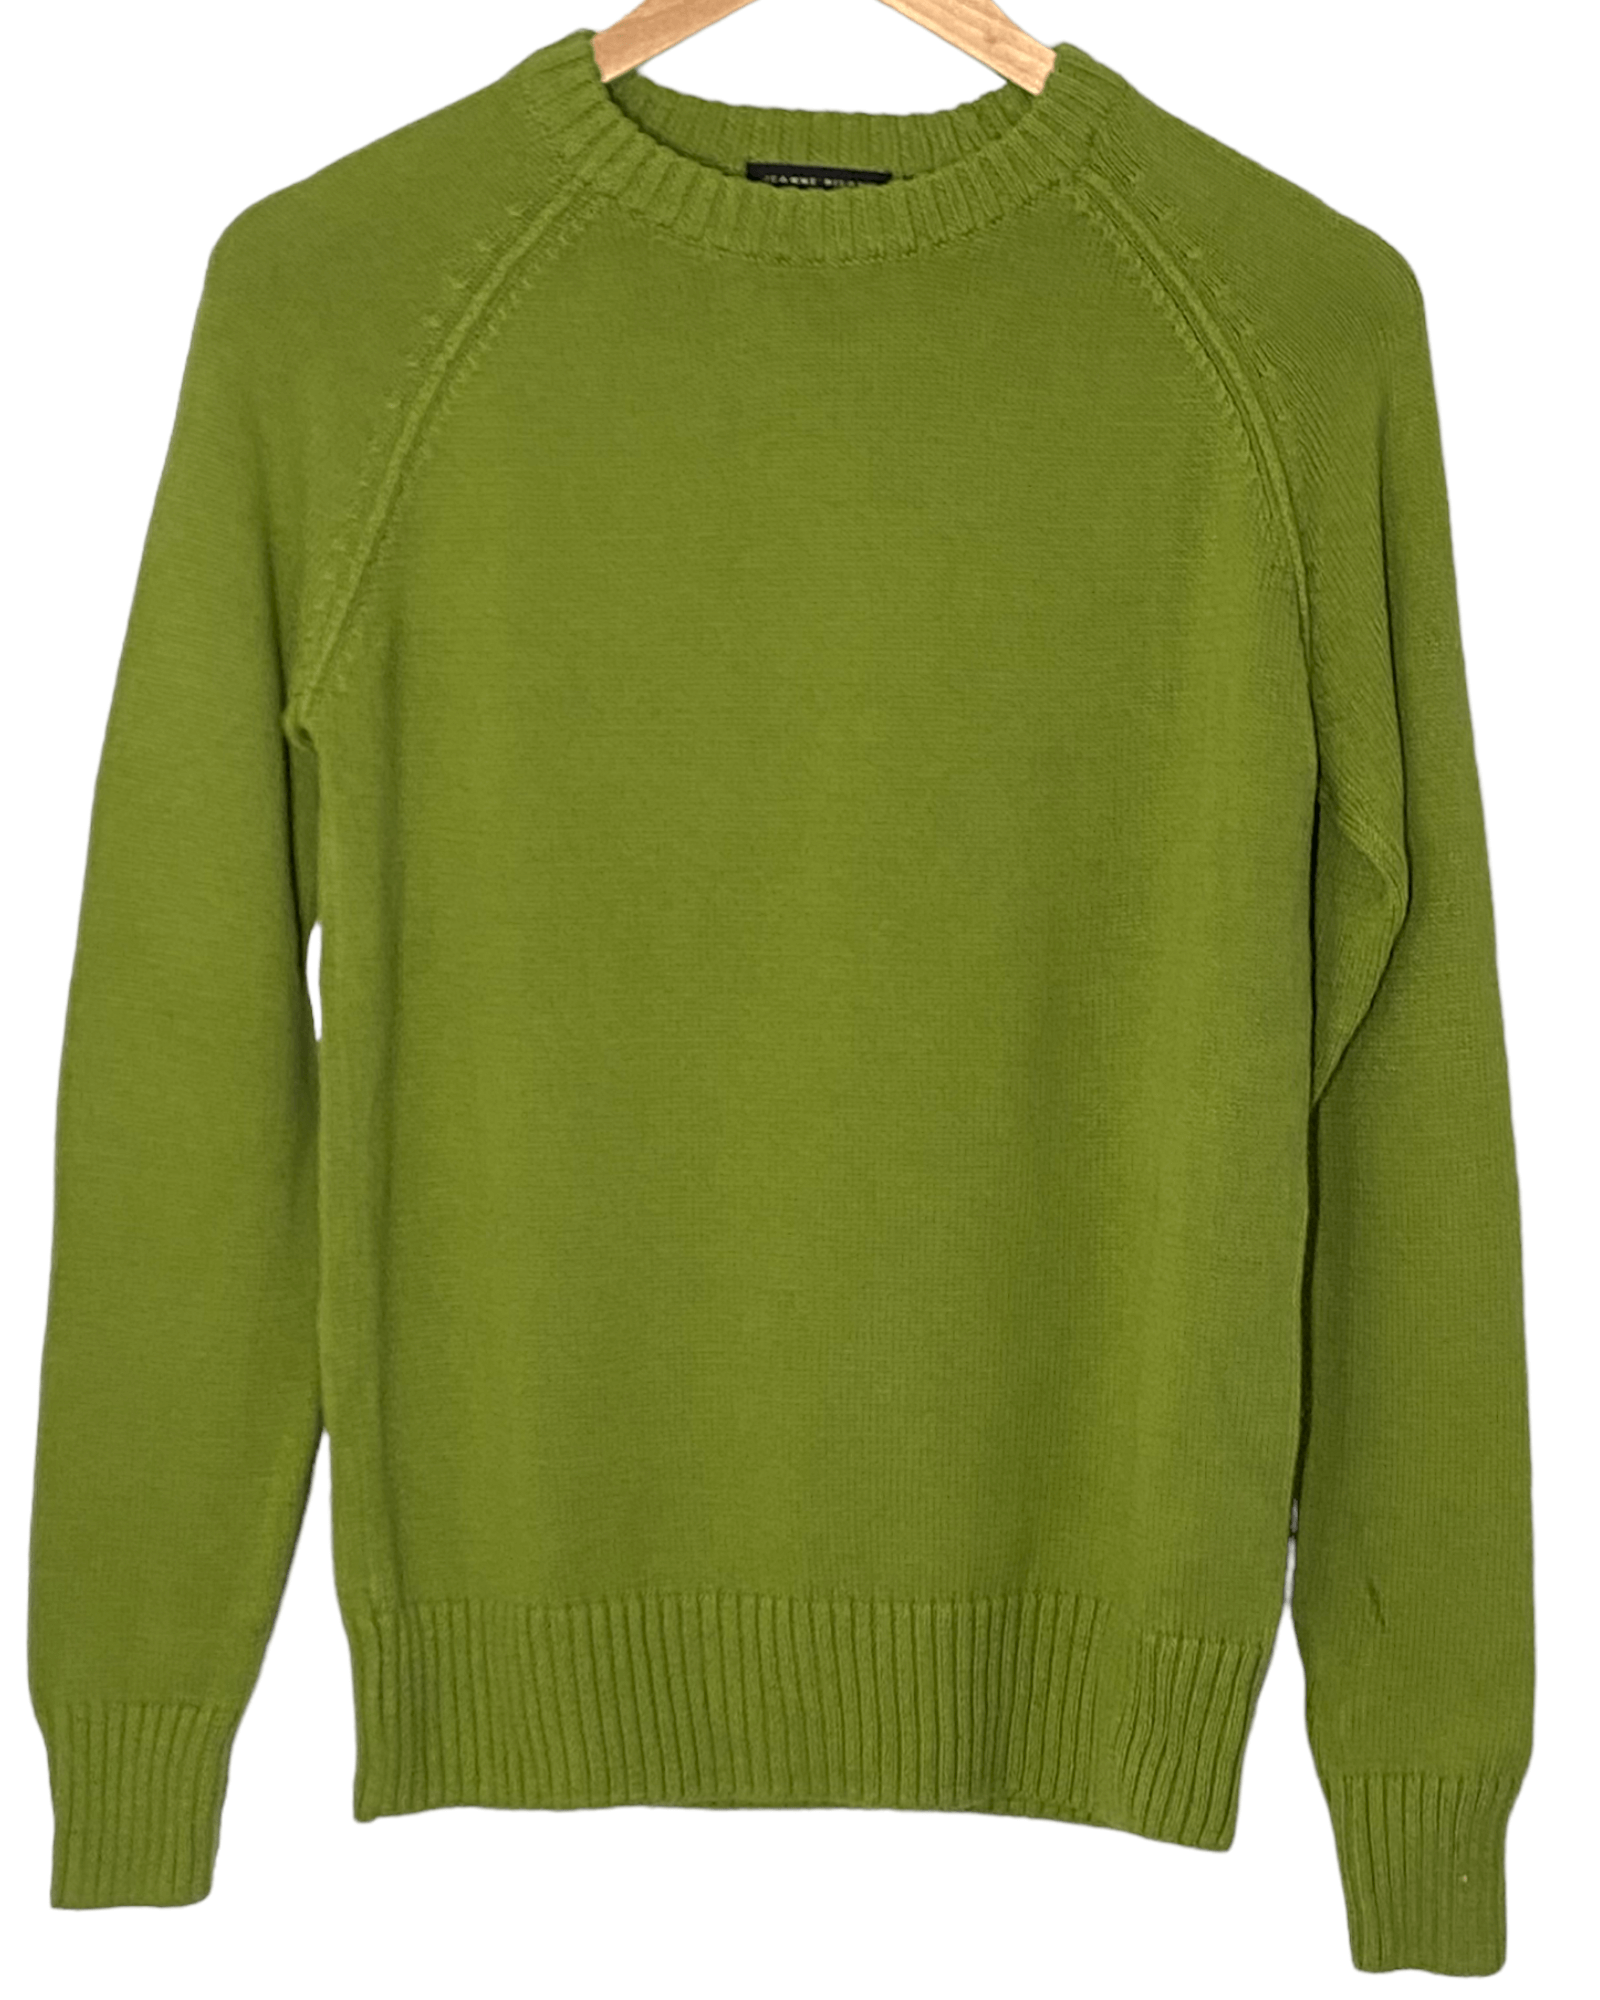 Warm Autumn JEANNE PIERRE fiddlehead green crewneck sweater